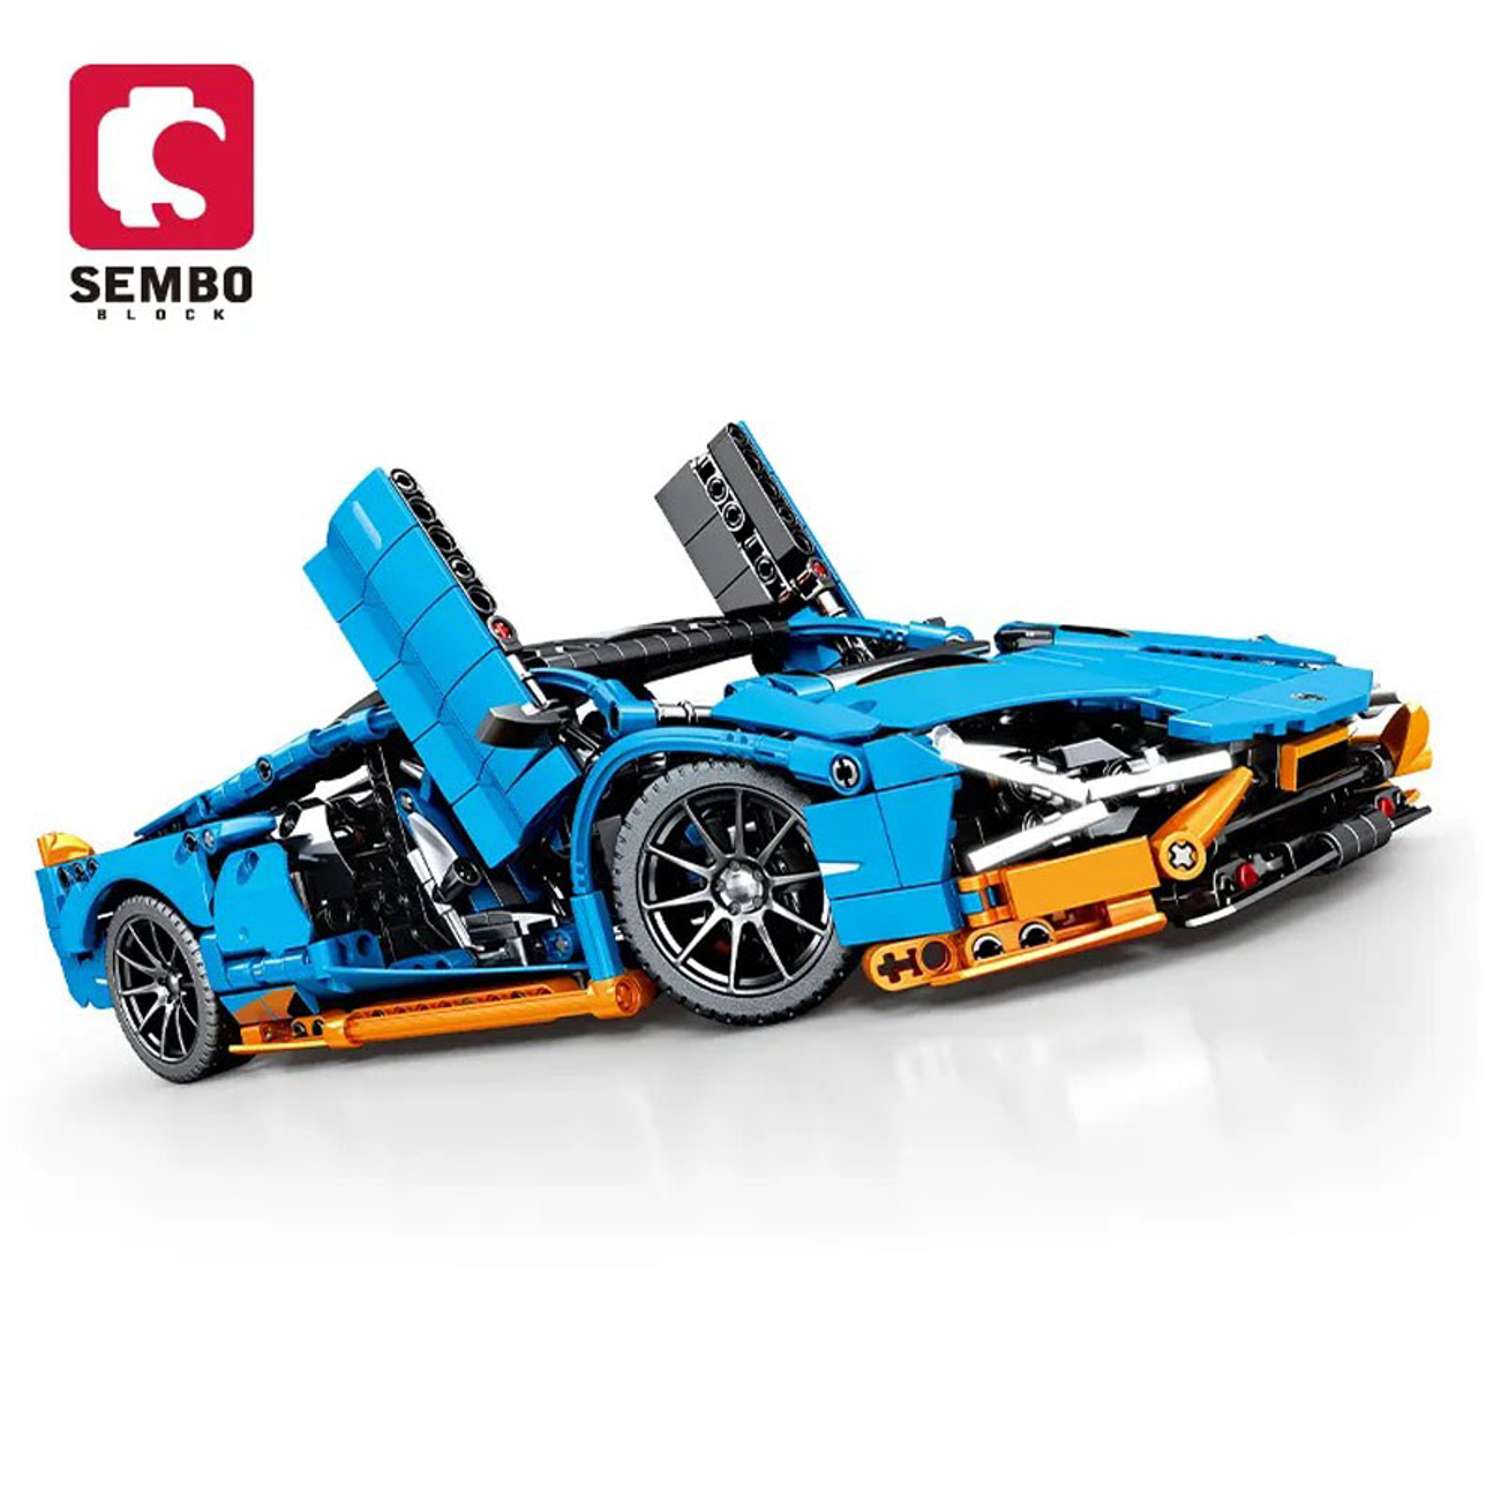 Конструктор Sembo Block Спорткар Lamborghini Sian FKP 37 - фото 1